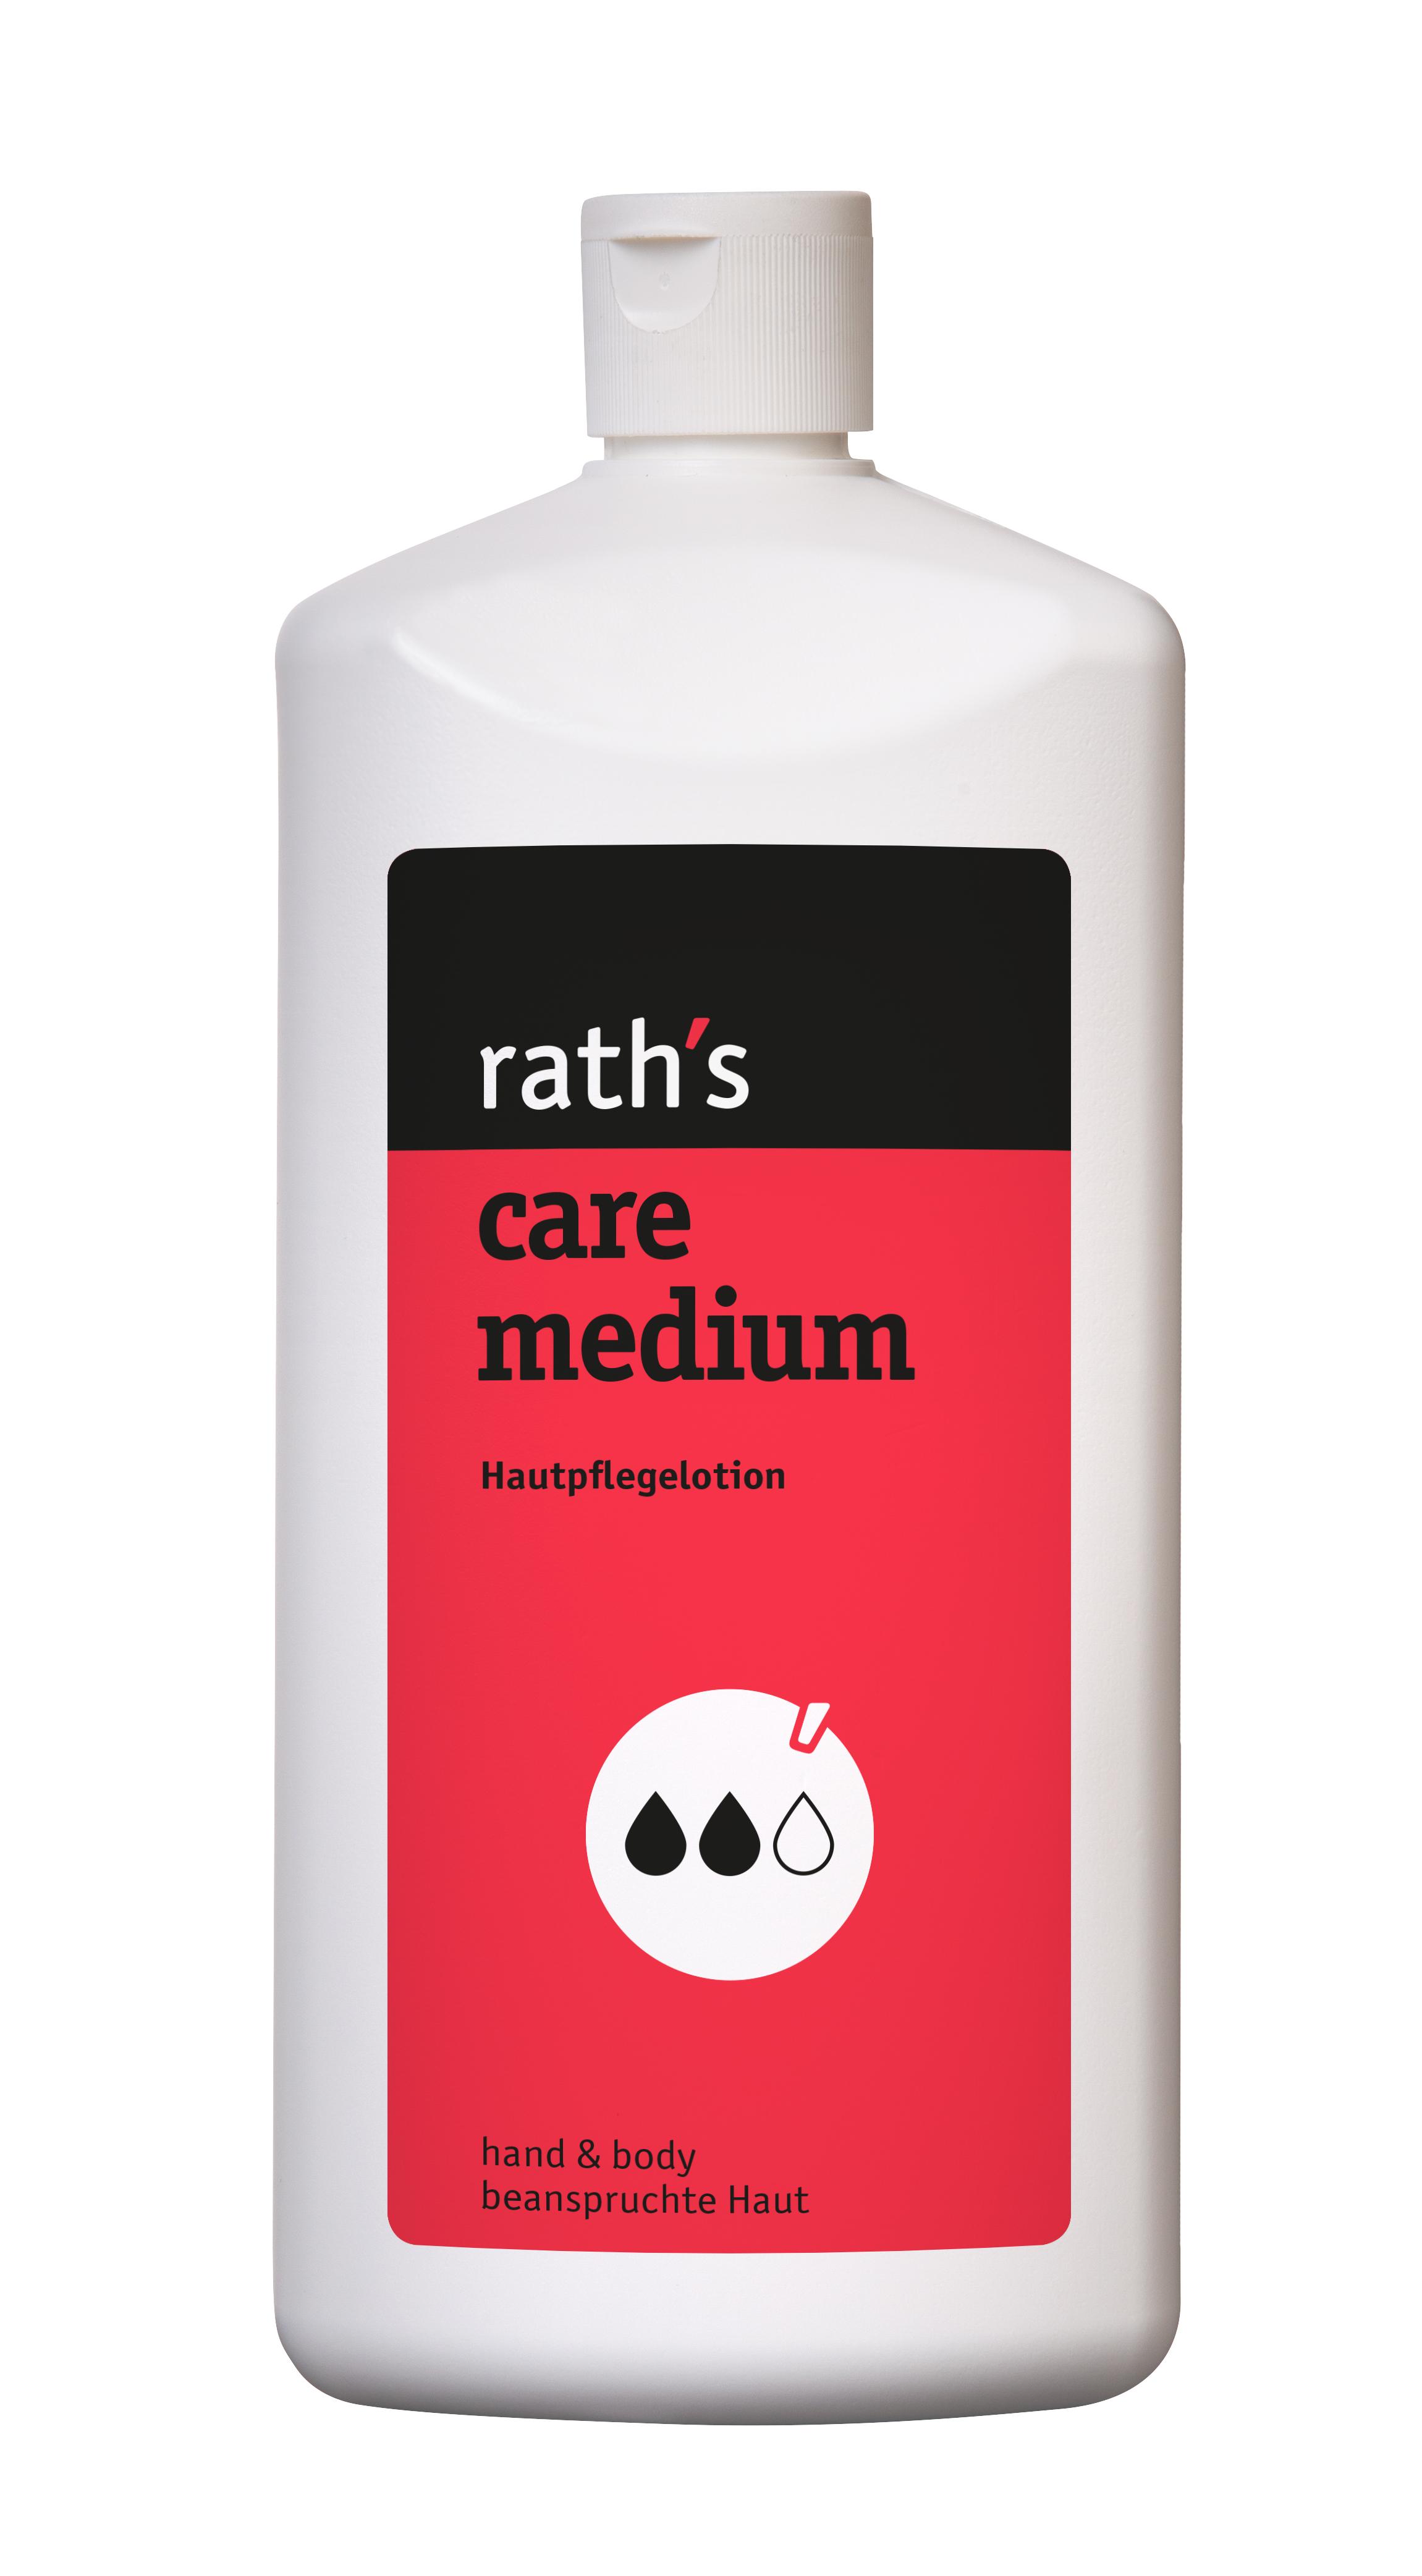 Rath's Care Medium Hautpflegelotion 1,0 L | Lotion pflegen Haut Hautpflege 1L